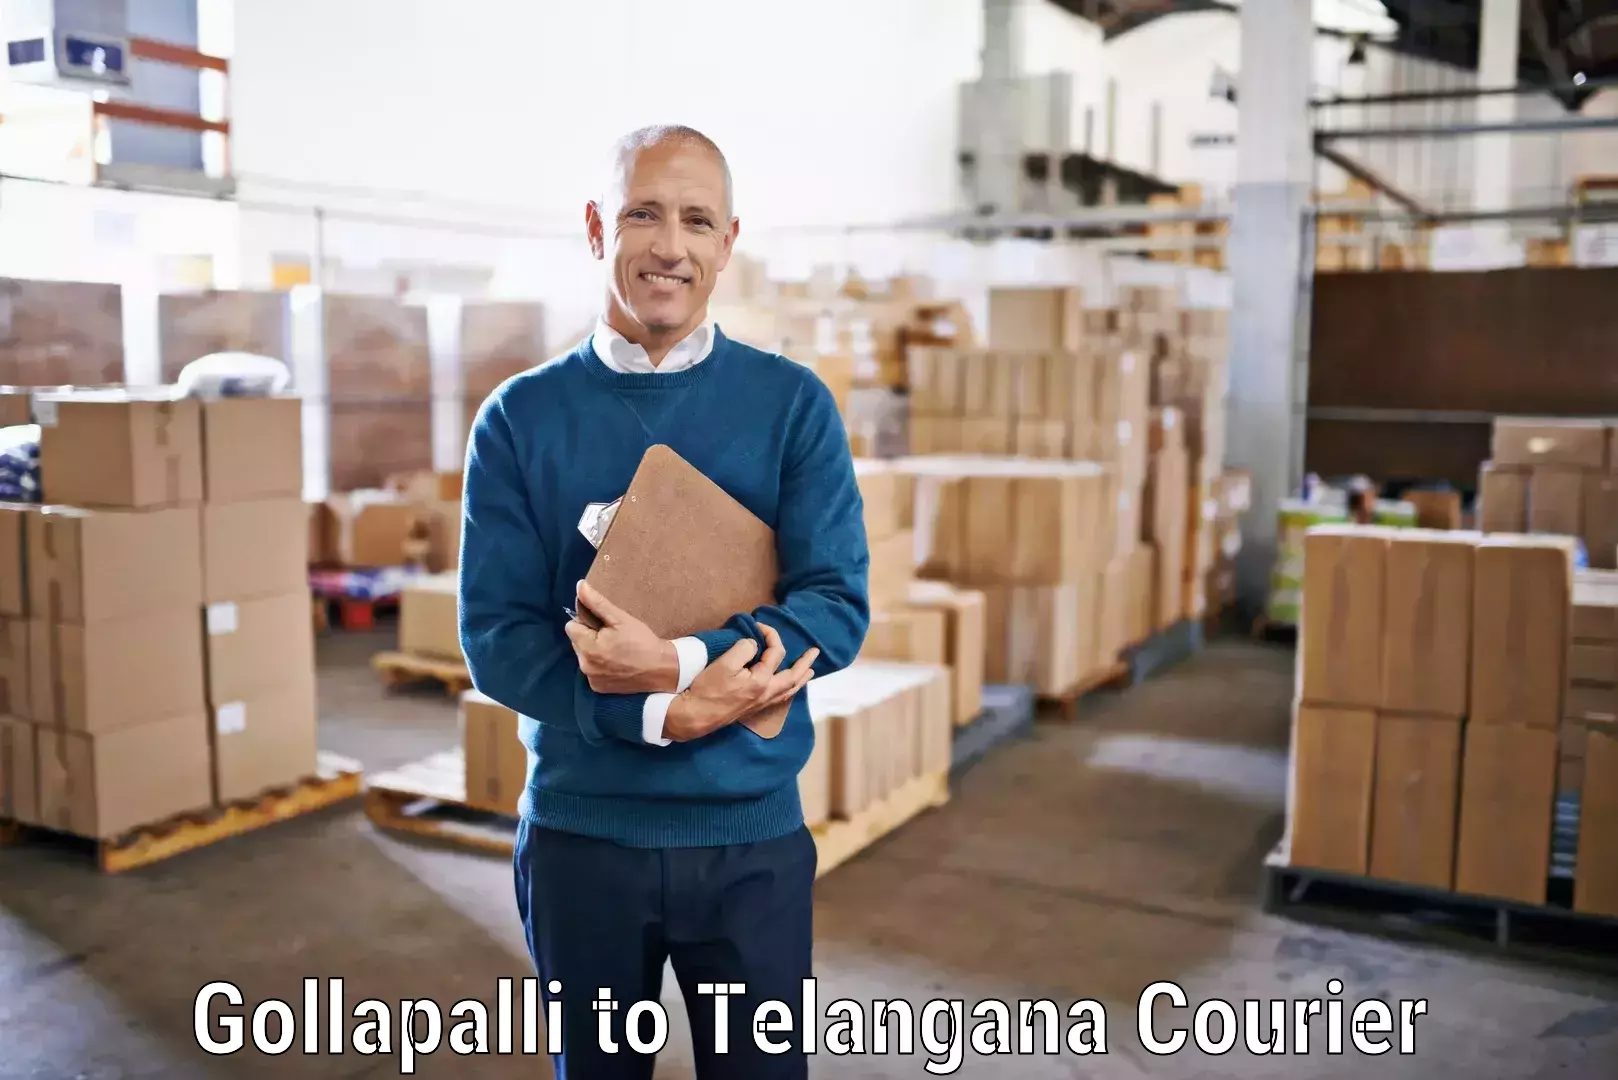 Professional courier handling Gollapalli to Yellandu